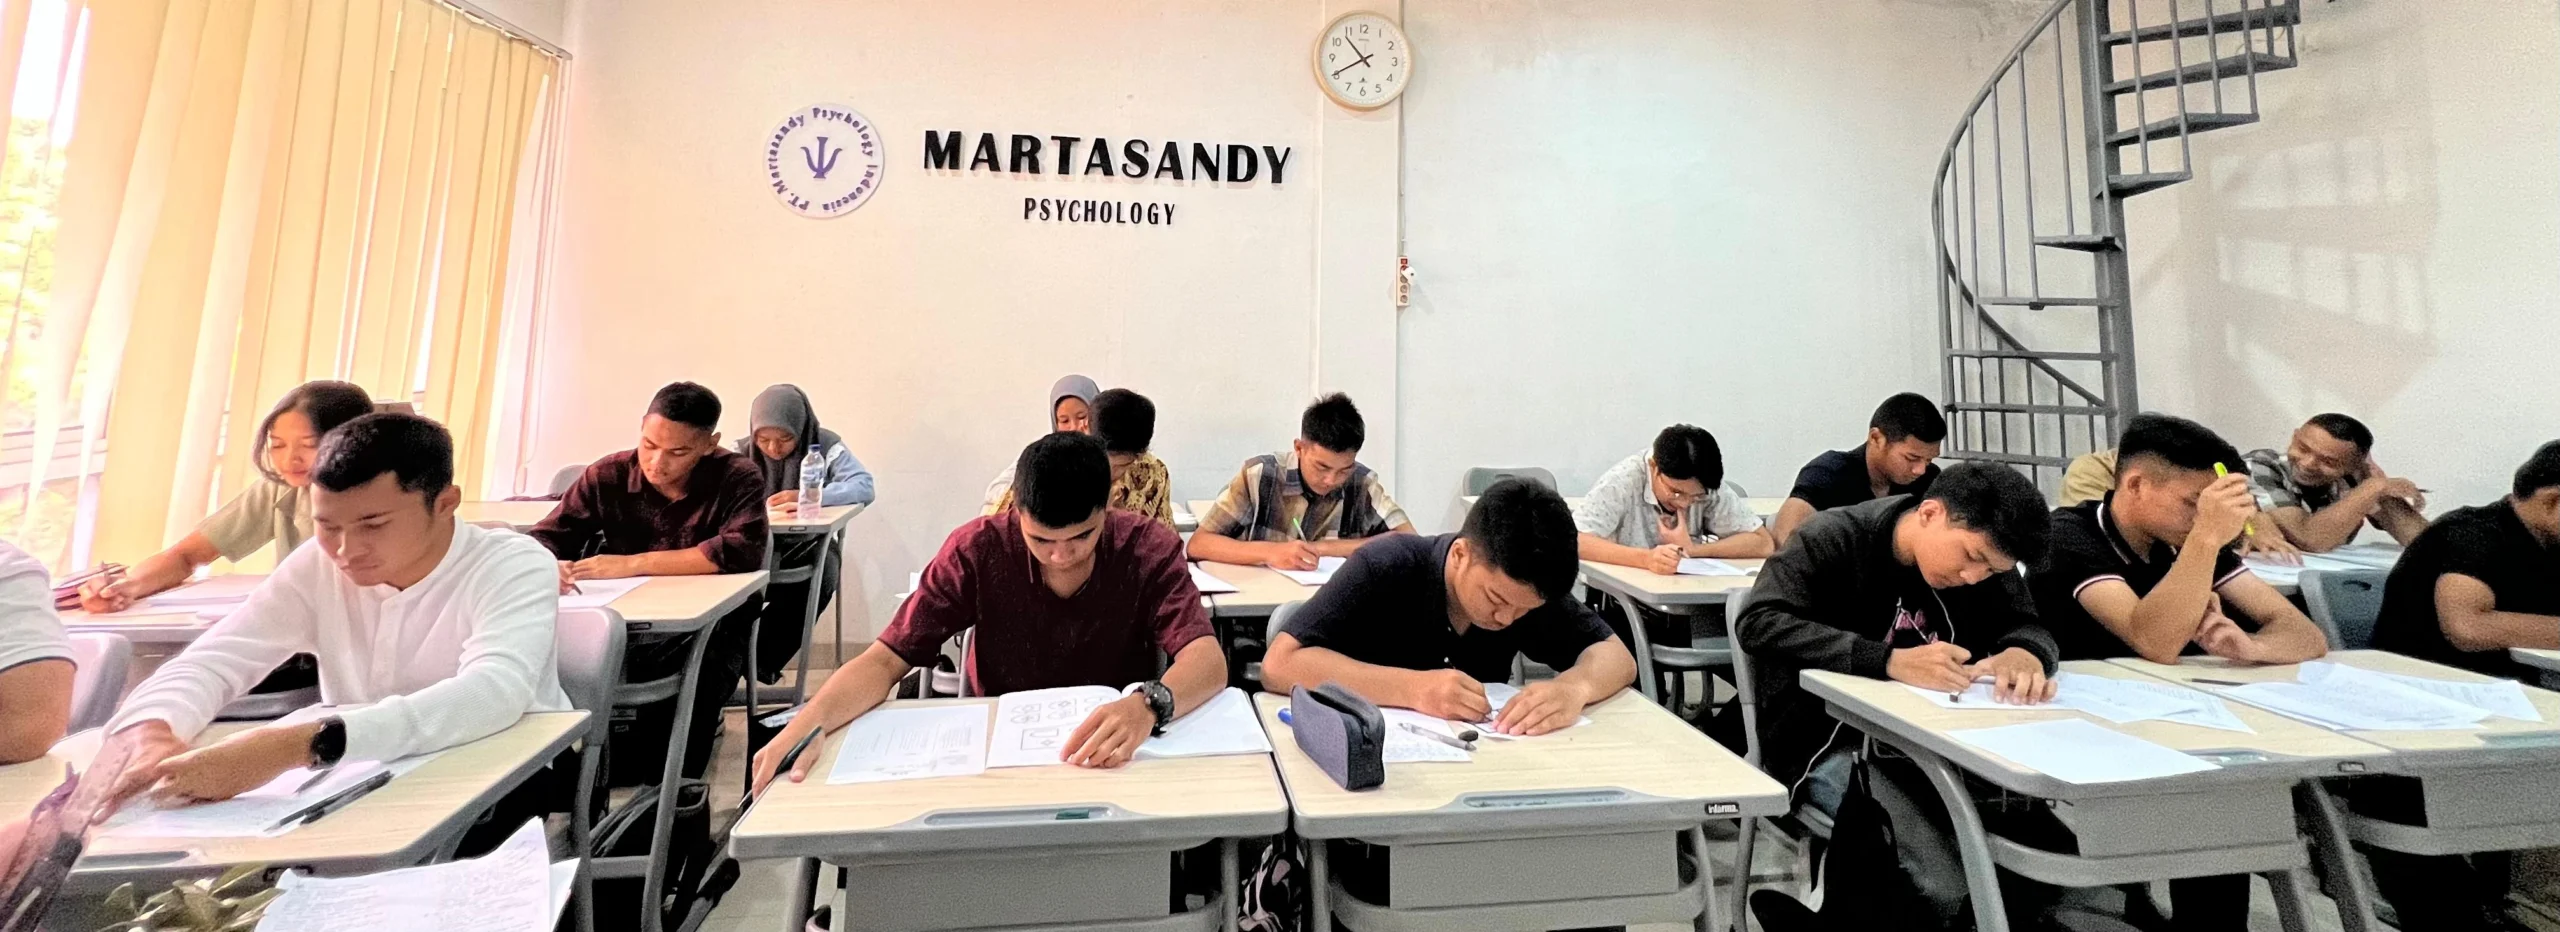 Pelatihan Psikologi di Martasandy Group (istimewa)